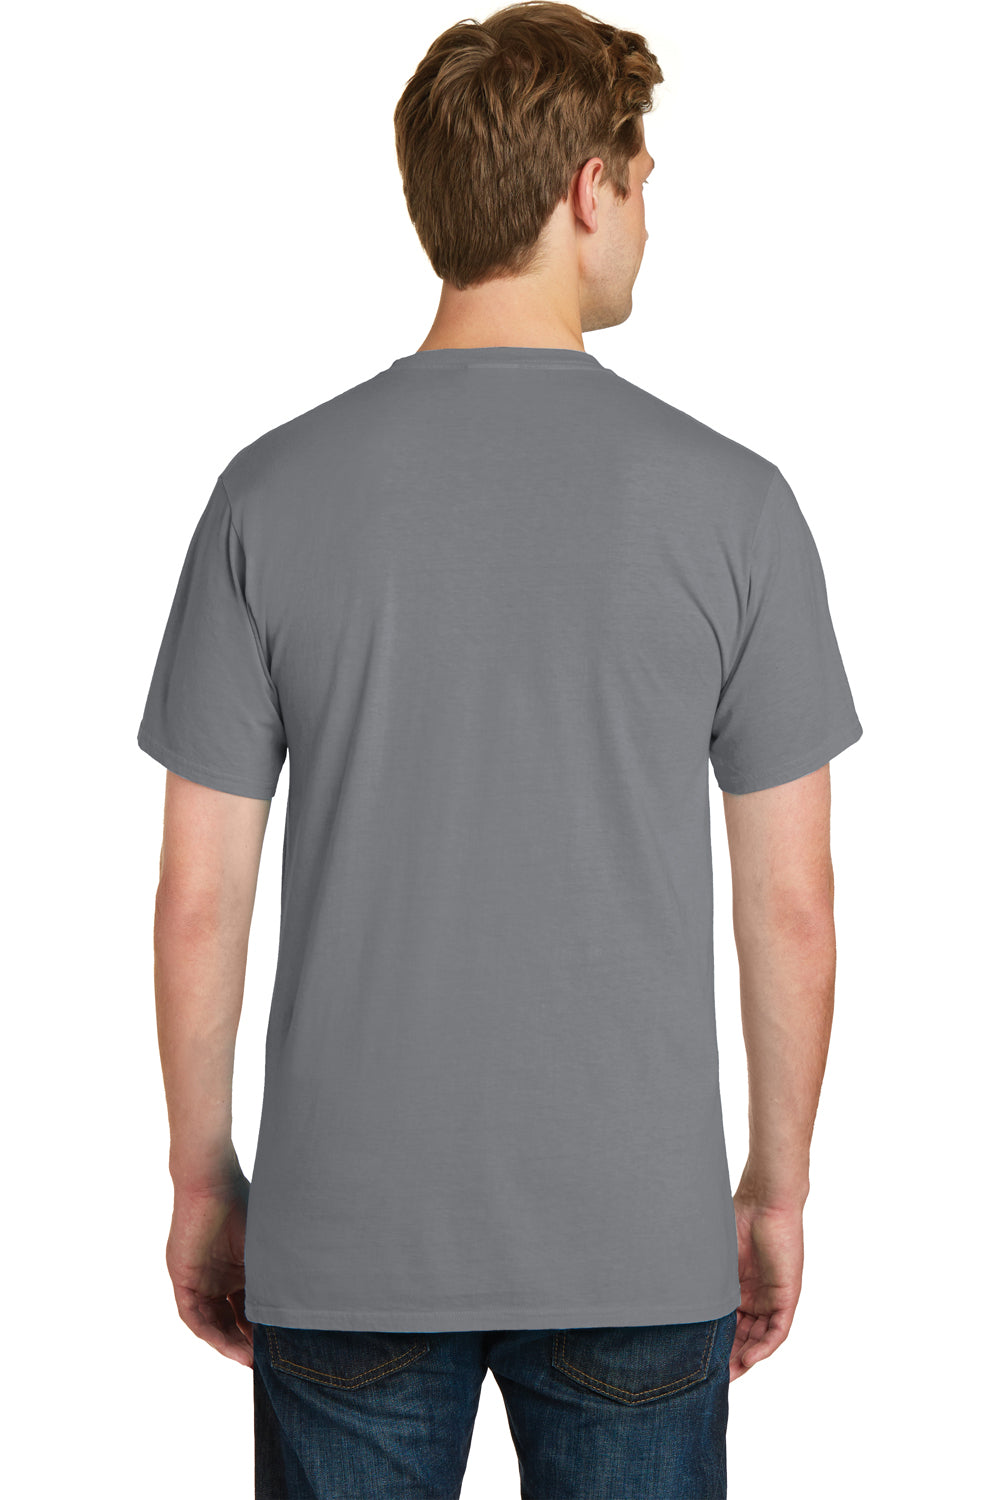 Port & Company PC099P Mens Beach Wash Short Sleeve Crewneck T-Shirt w/ Pocket Pewter Grey Back